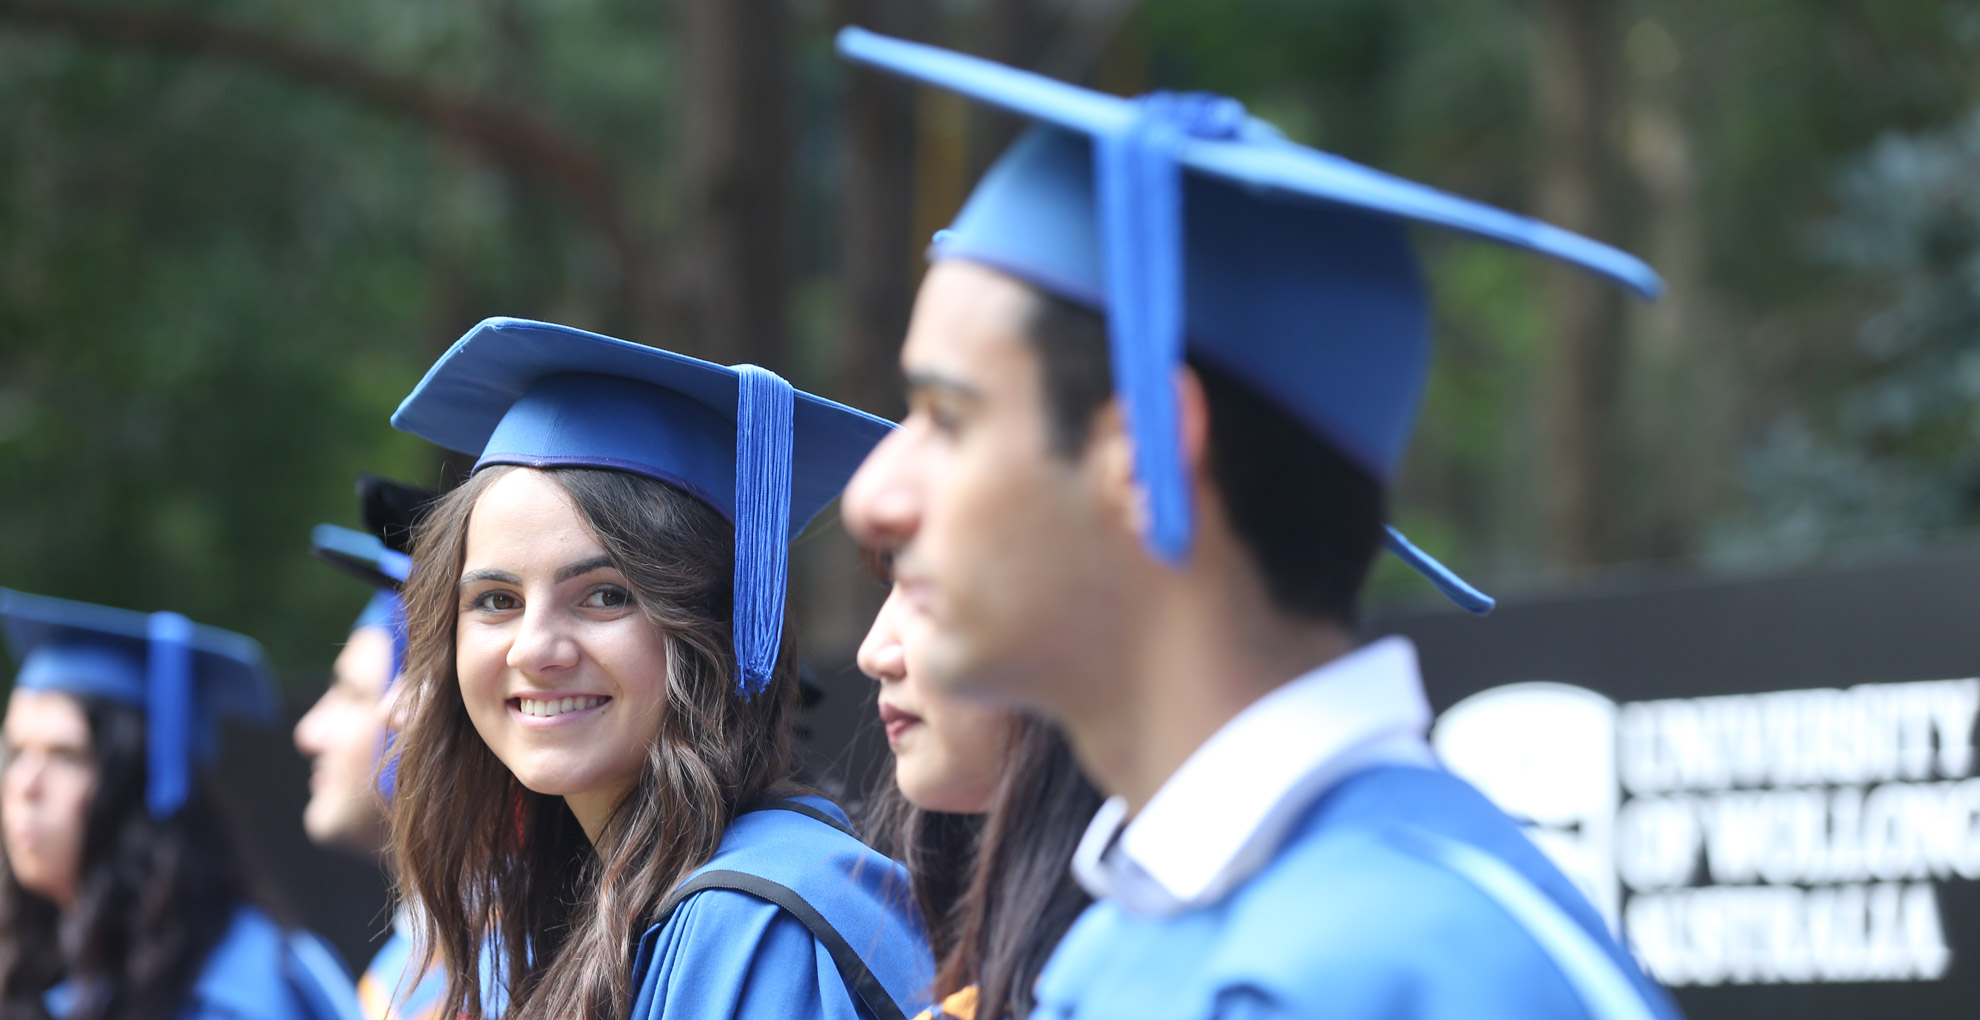 A graduate smiles at the camera during the graduation ceremonies. Photo: Paul Jones